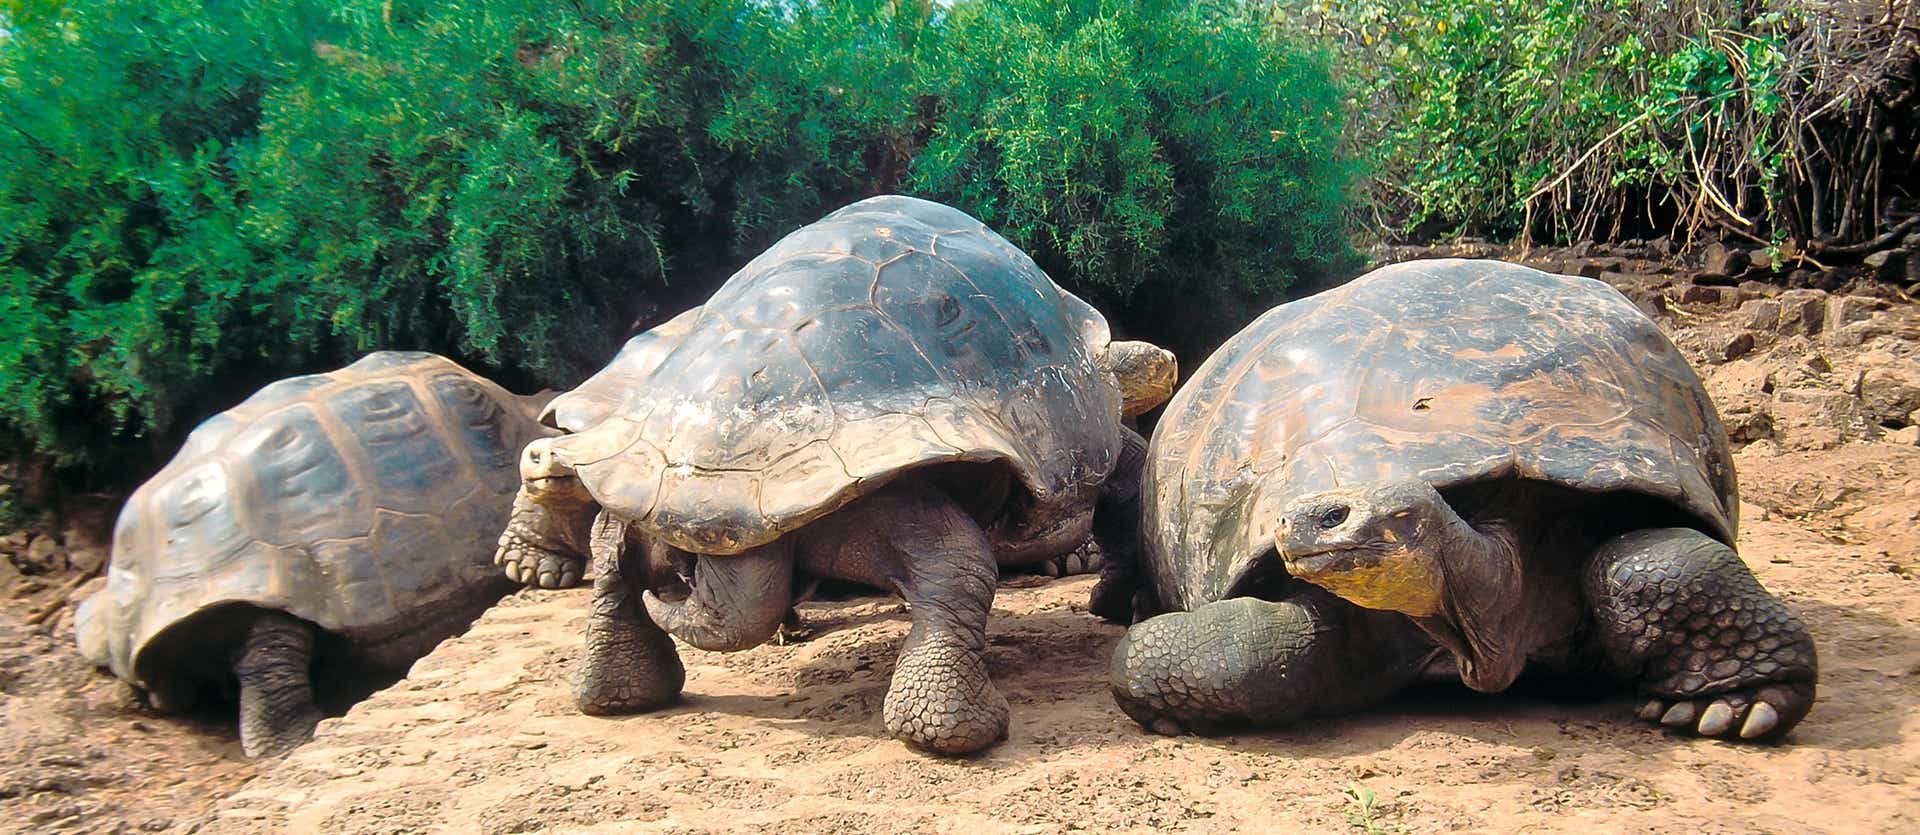 Giant Tortoises on Santa Cruz <span class="iconos separador"></span> Galapagos Islands <span class="iconos separador"></span> Ecuador